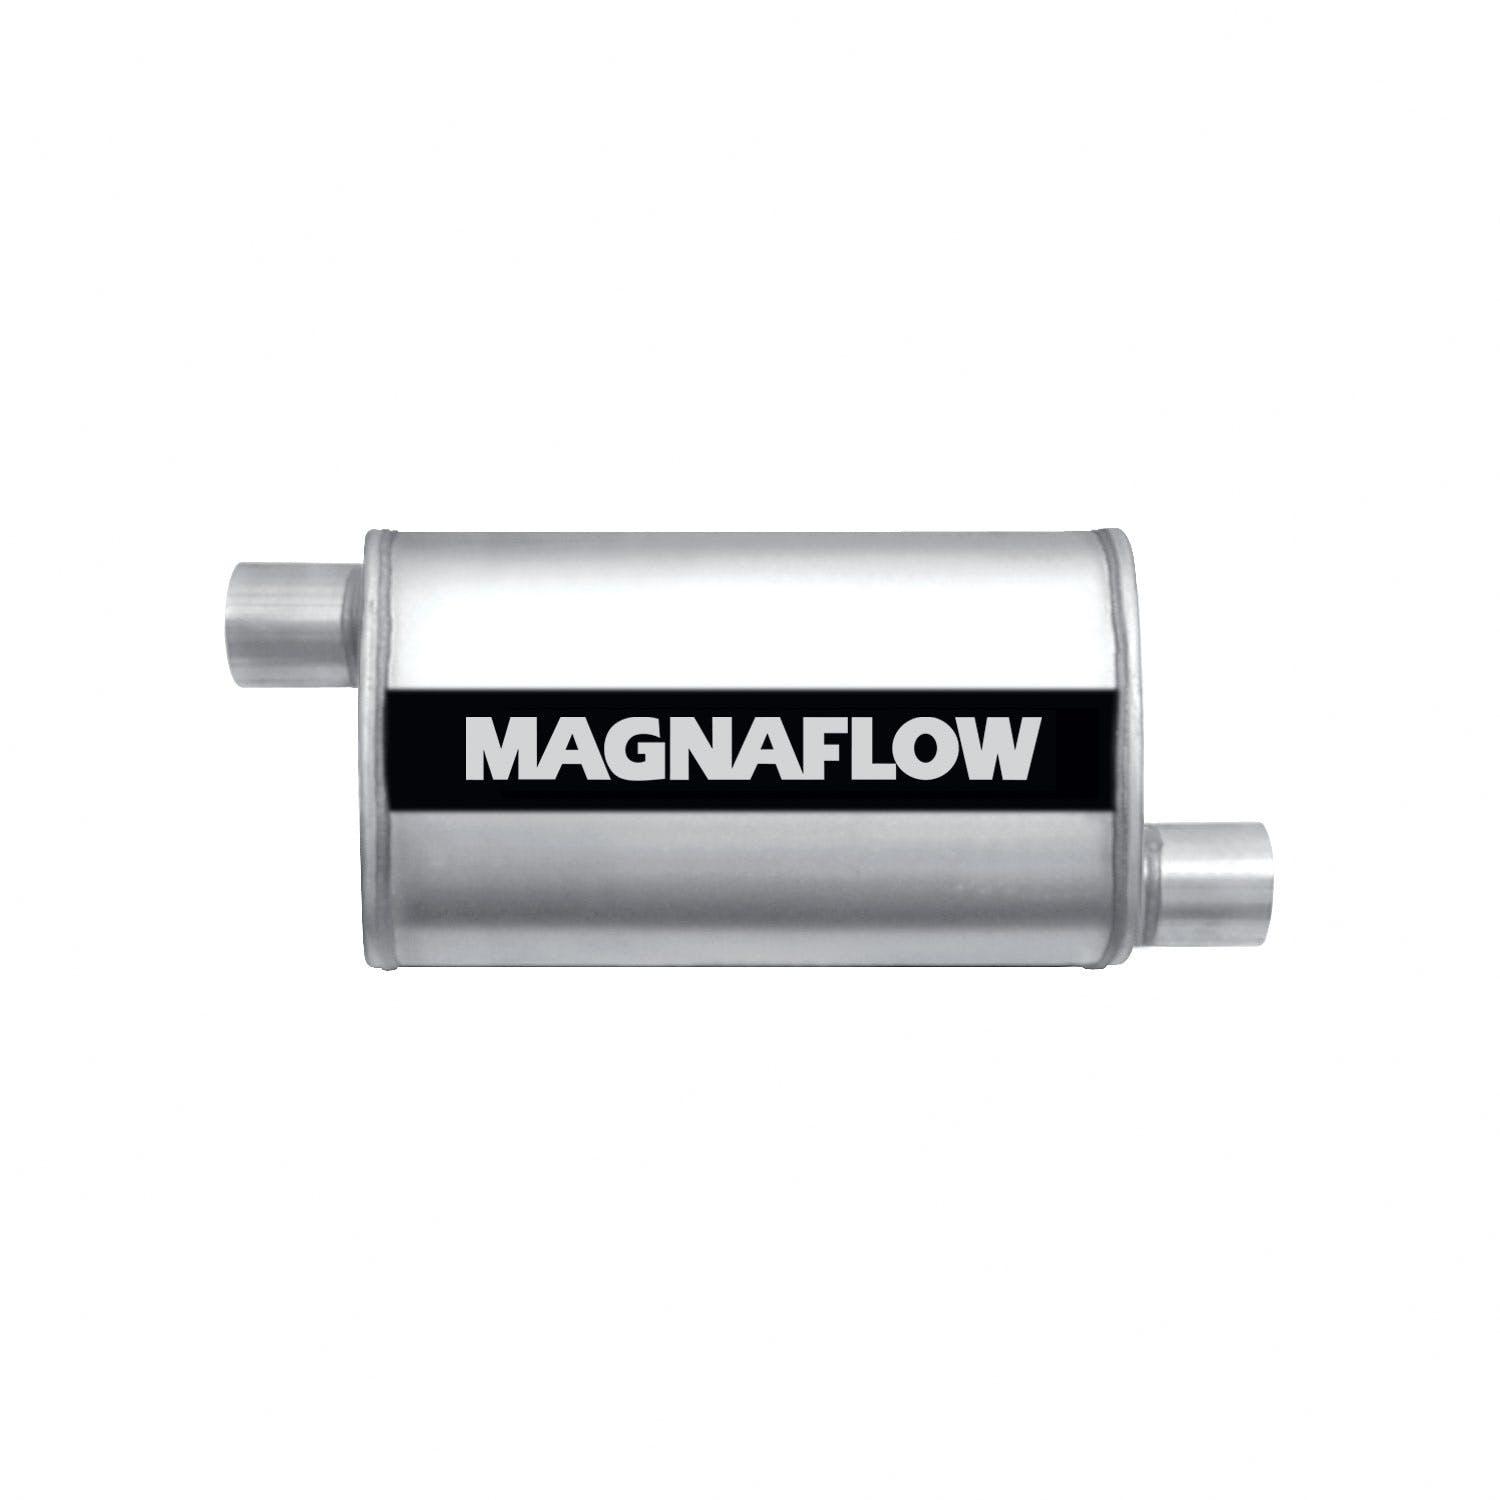 MagnaFlow Exhaust Products 11235 Universal Muffler